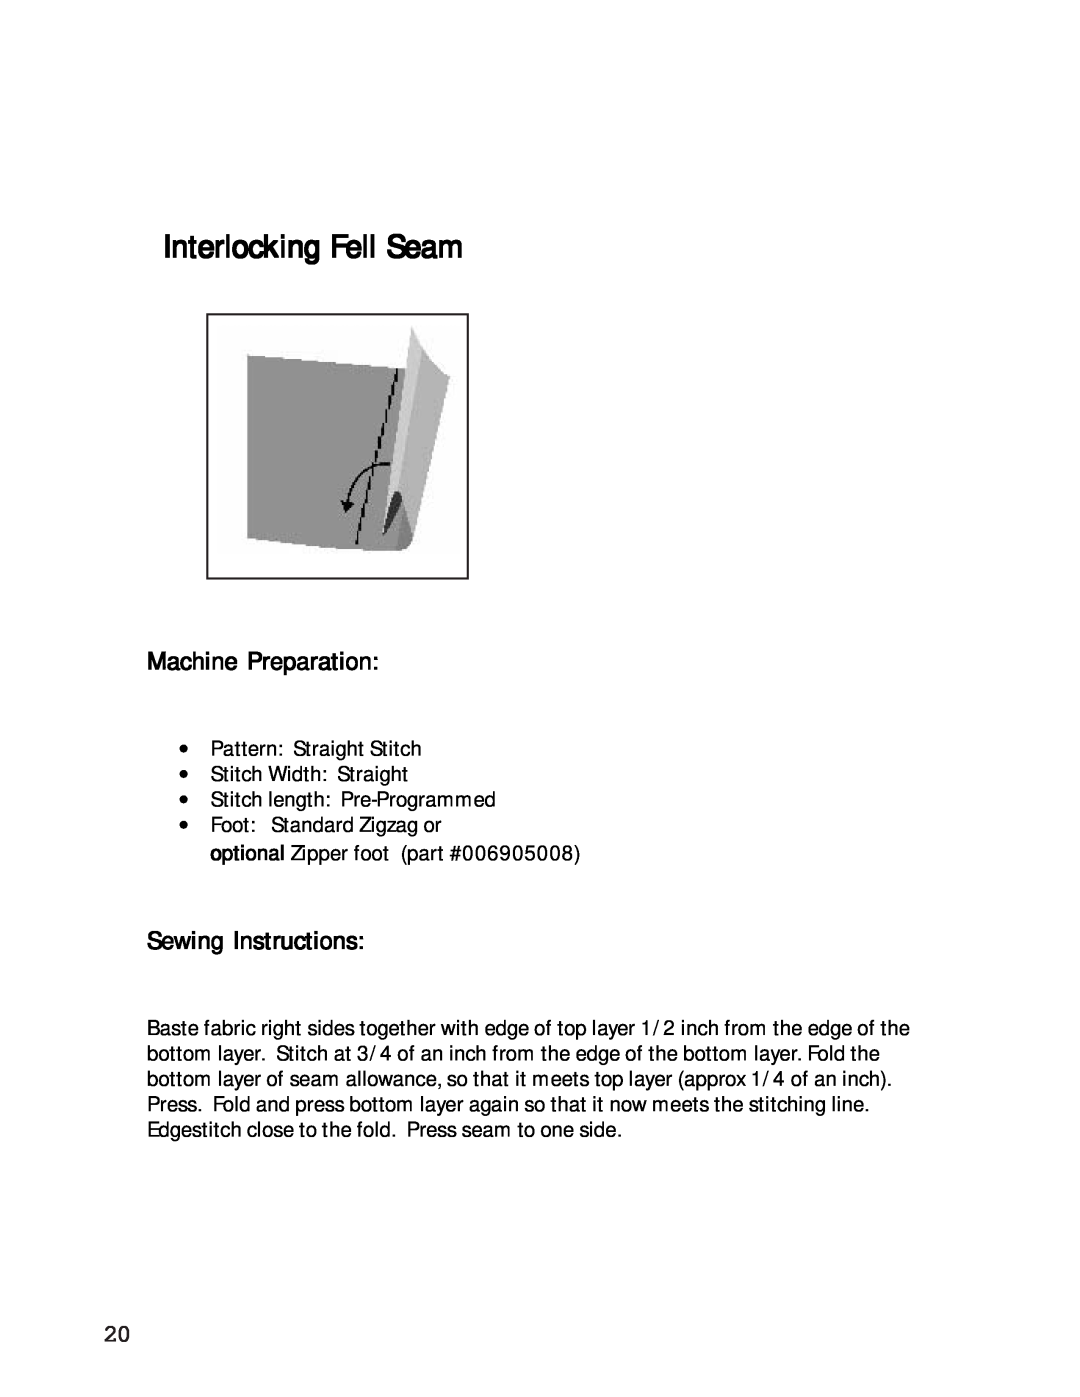 Singer 27 manual Interlocking Fell Seam, Machine Preparation, Sewing Instructions 